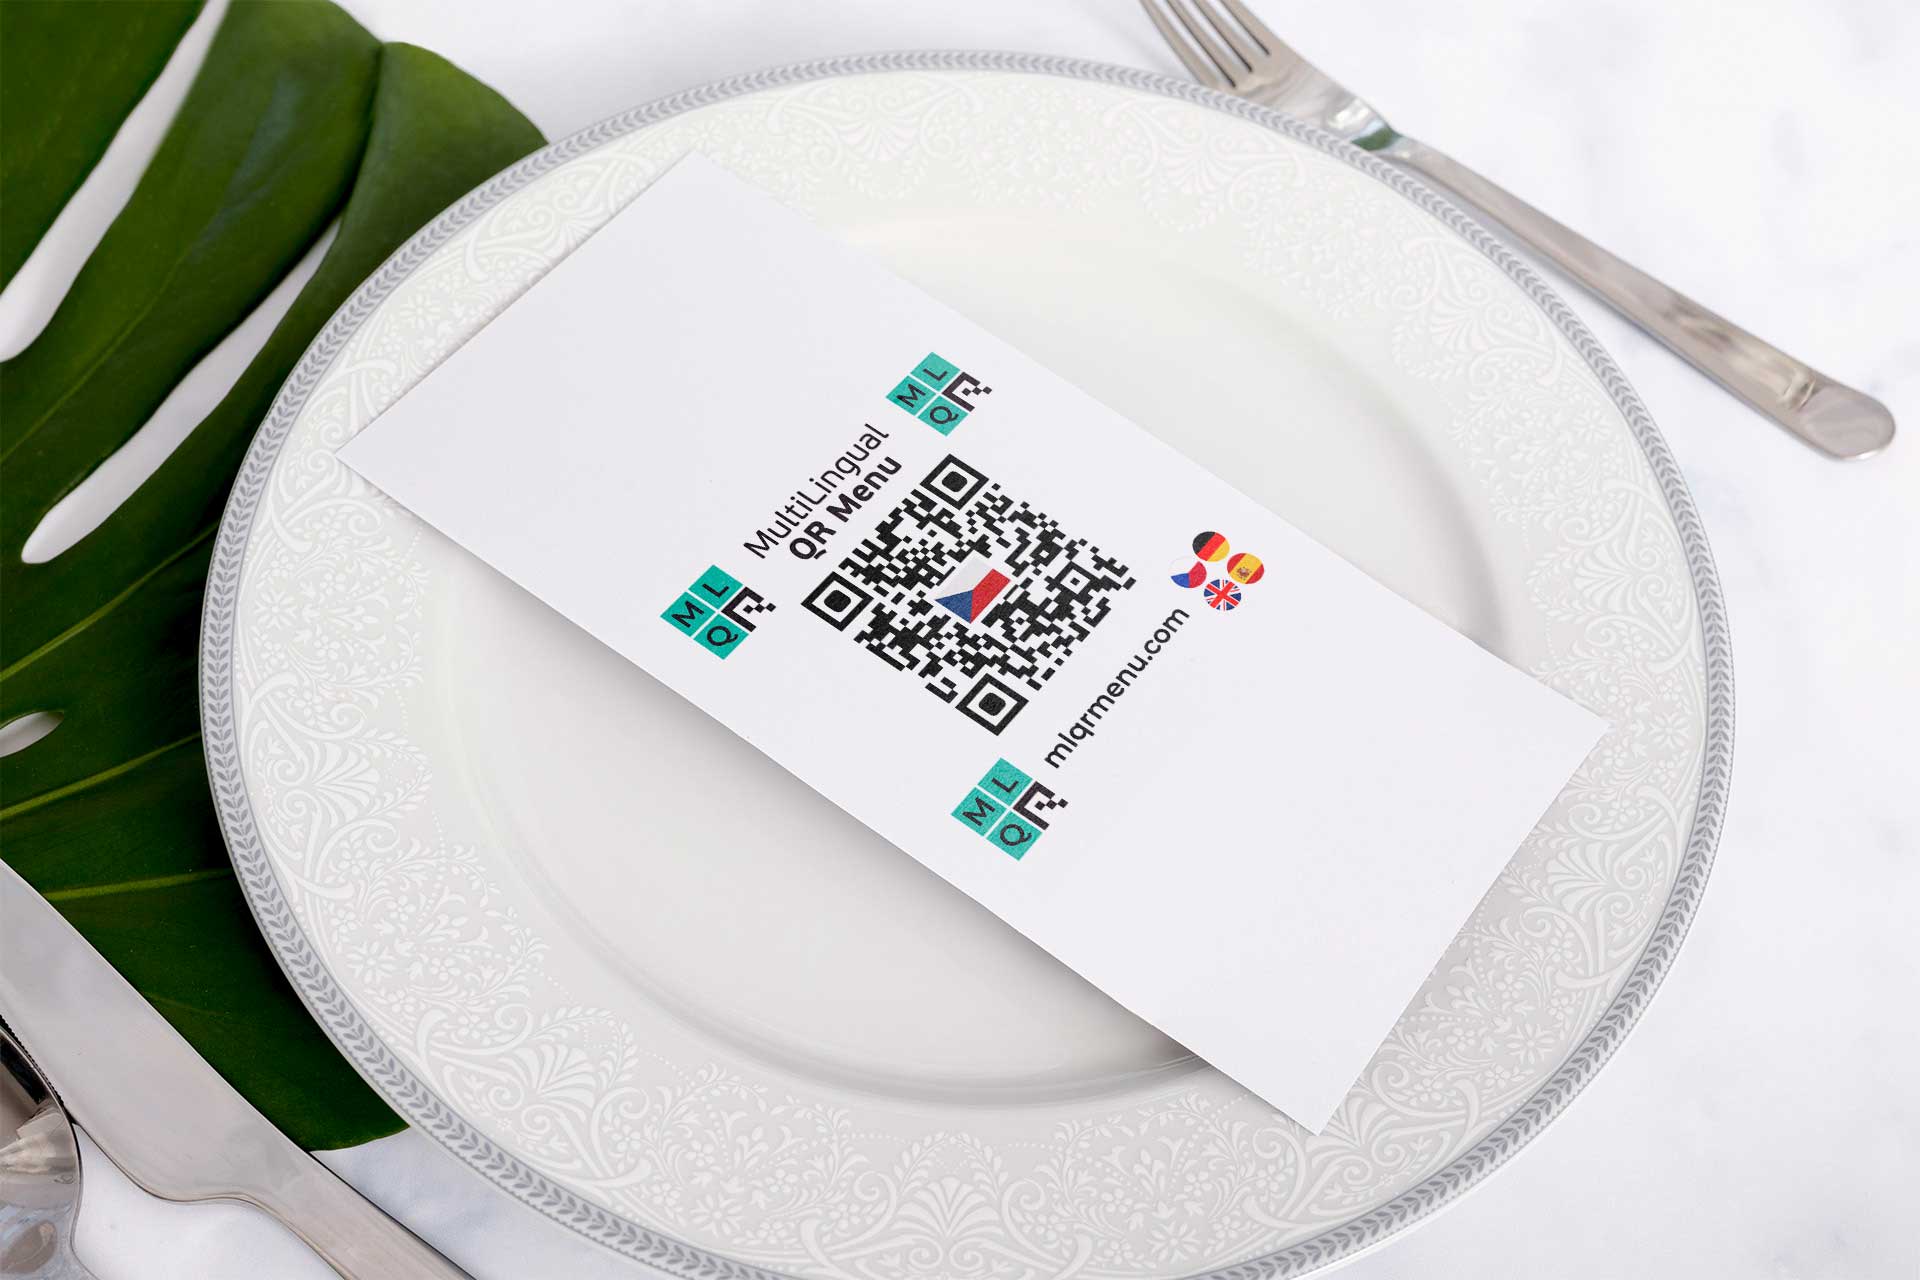 qr code menu for restaurants, bars etc - digital menu management app